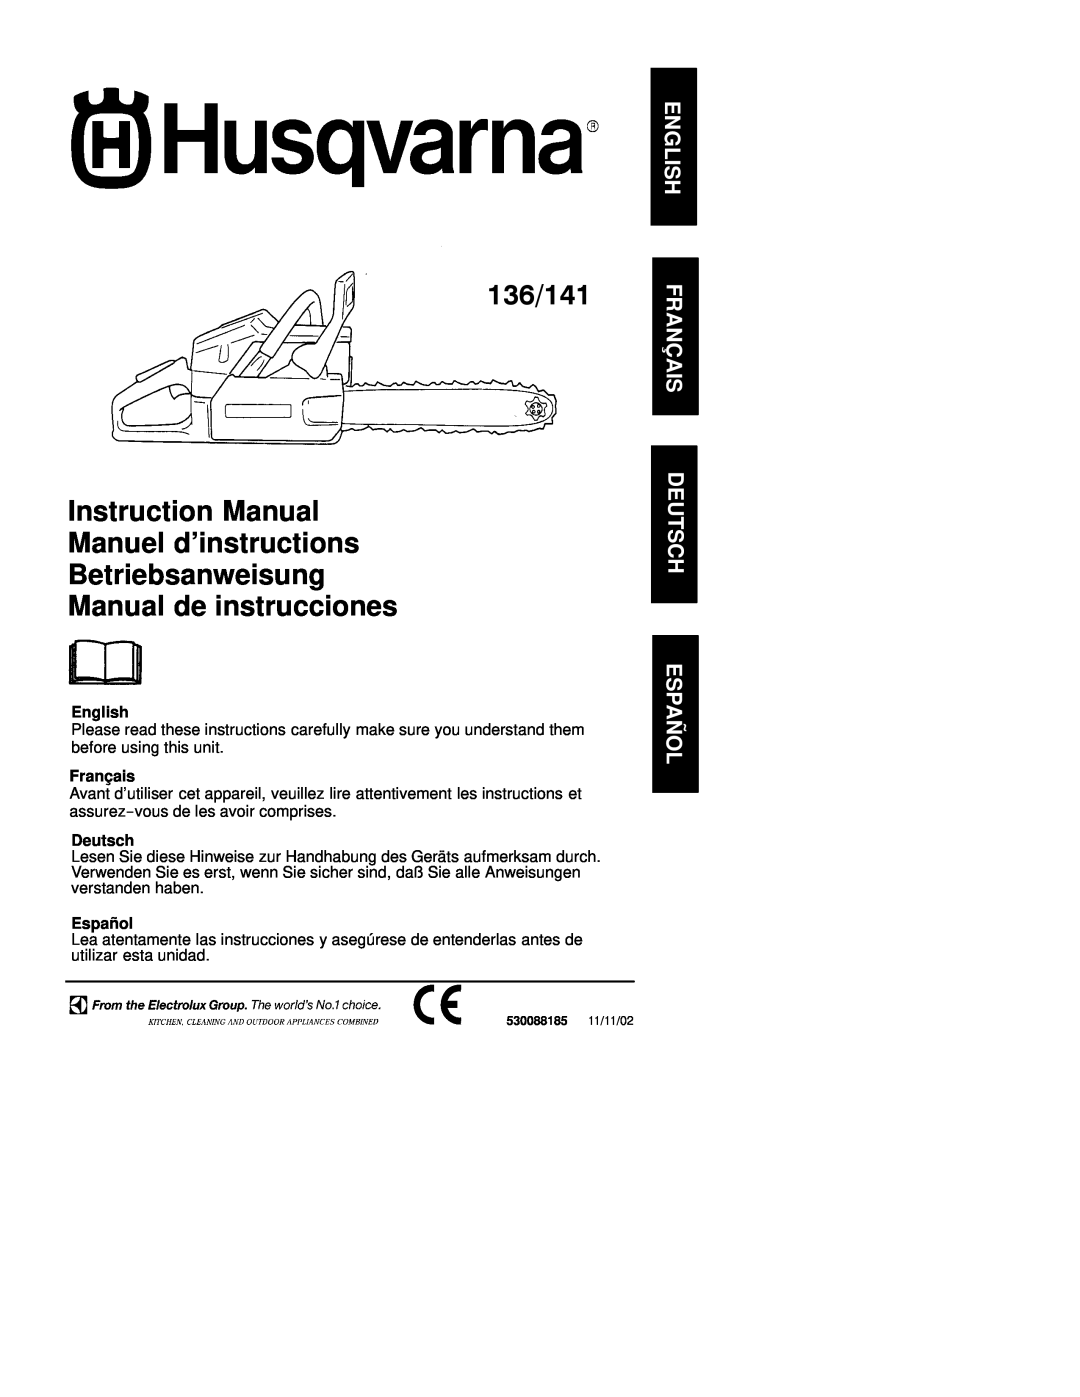 Husqvarna 136, 141 instruction manual 136/141, Instruction Manual Manuel d’instructions Betriebsanweisung, English 